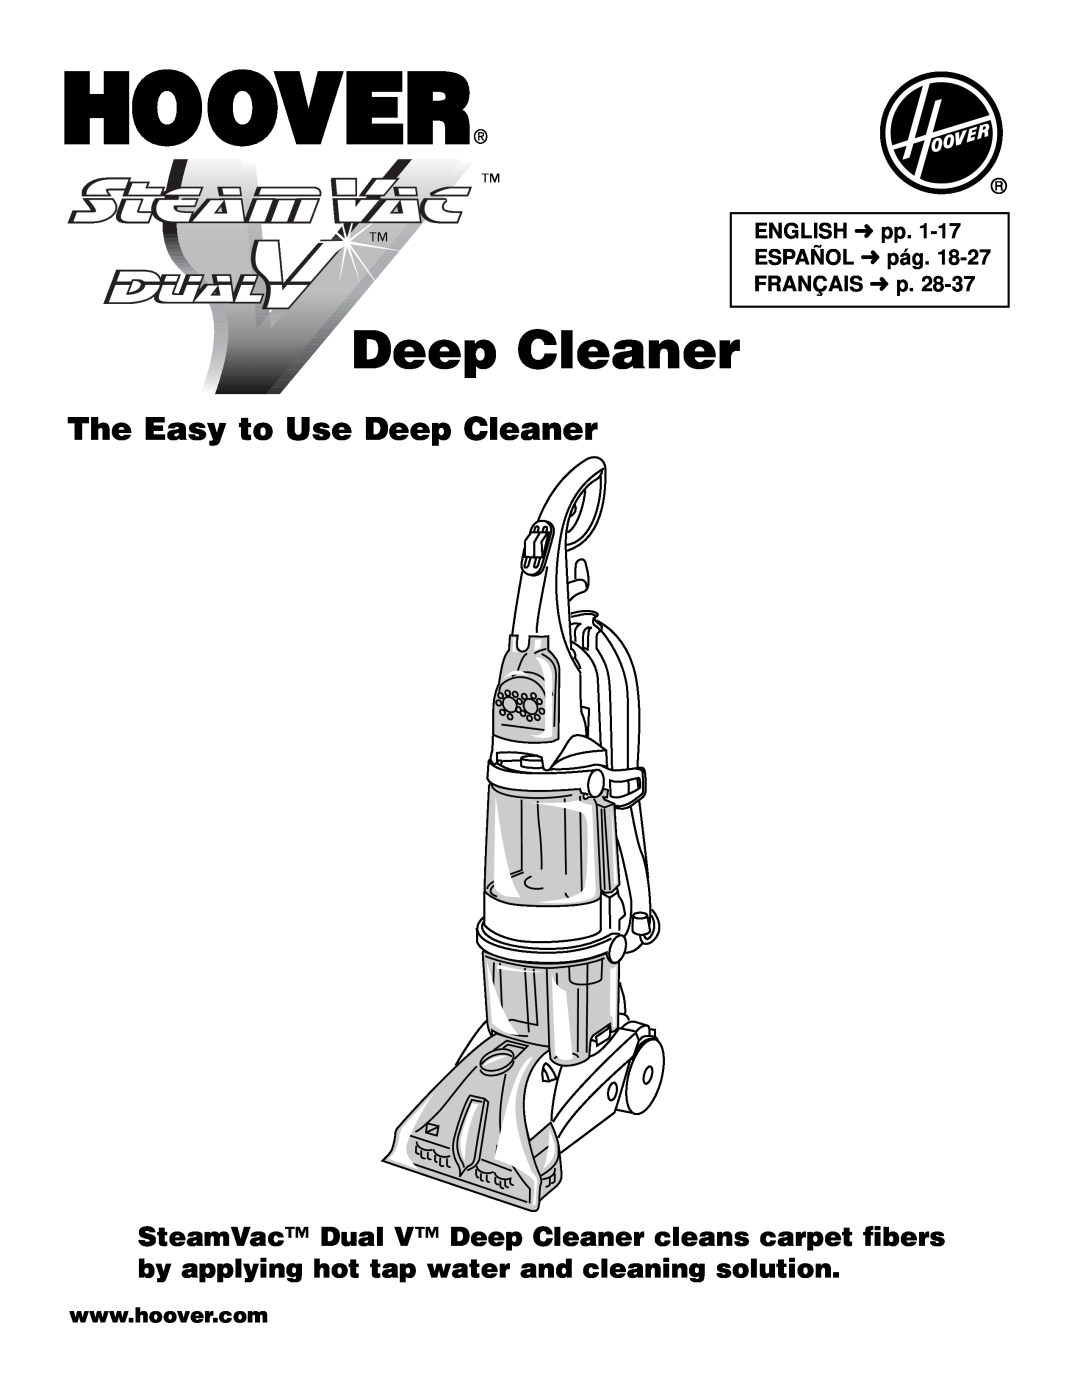 Hoover Deep Cleaner Steam Vacuum manual The Easy to Use Deep Cleaner, ENGLISH pp. 1-17 ESPAÑOL pág. 18-27 FRANÇAIS p 